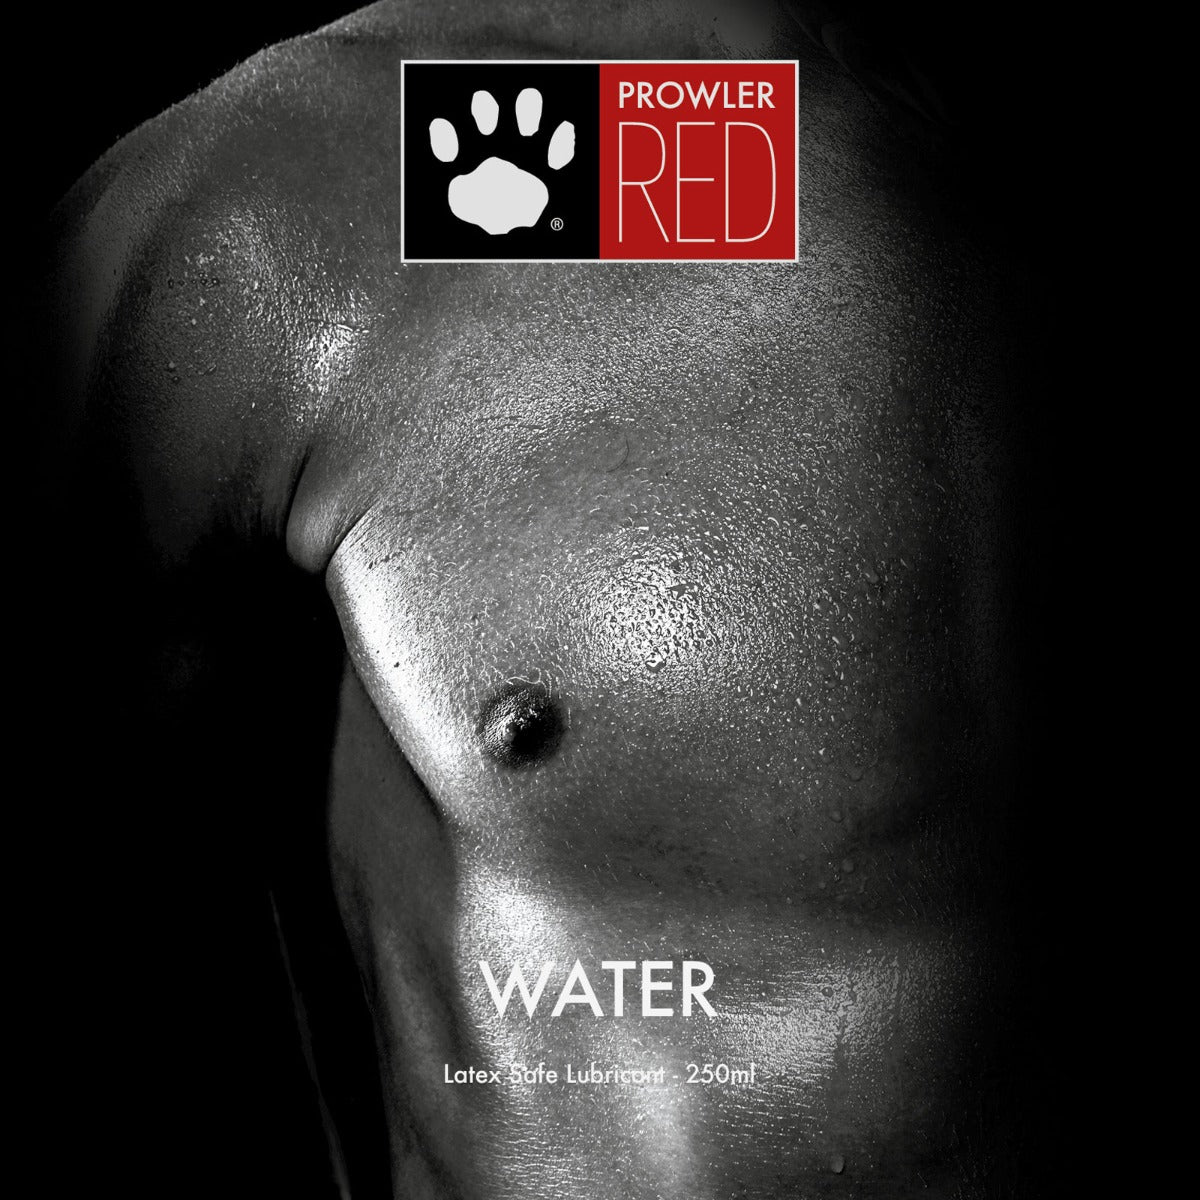 Water Based Lube Prowler RED Water Based Lube 250ml   